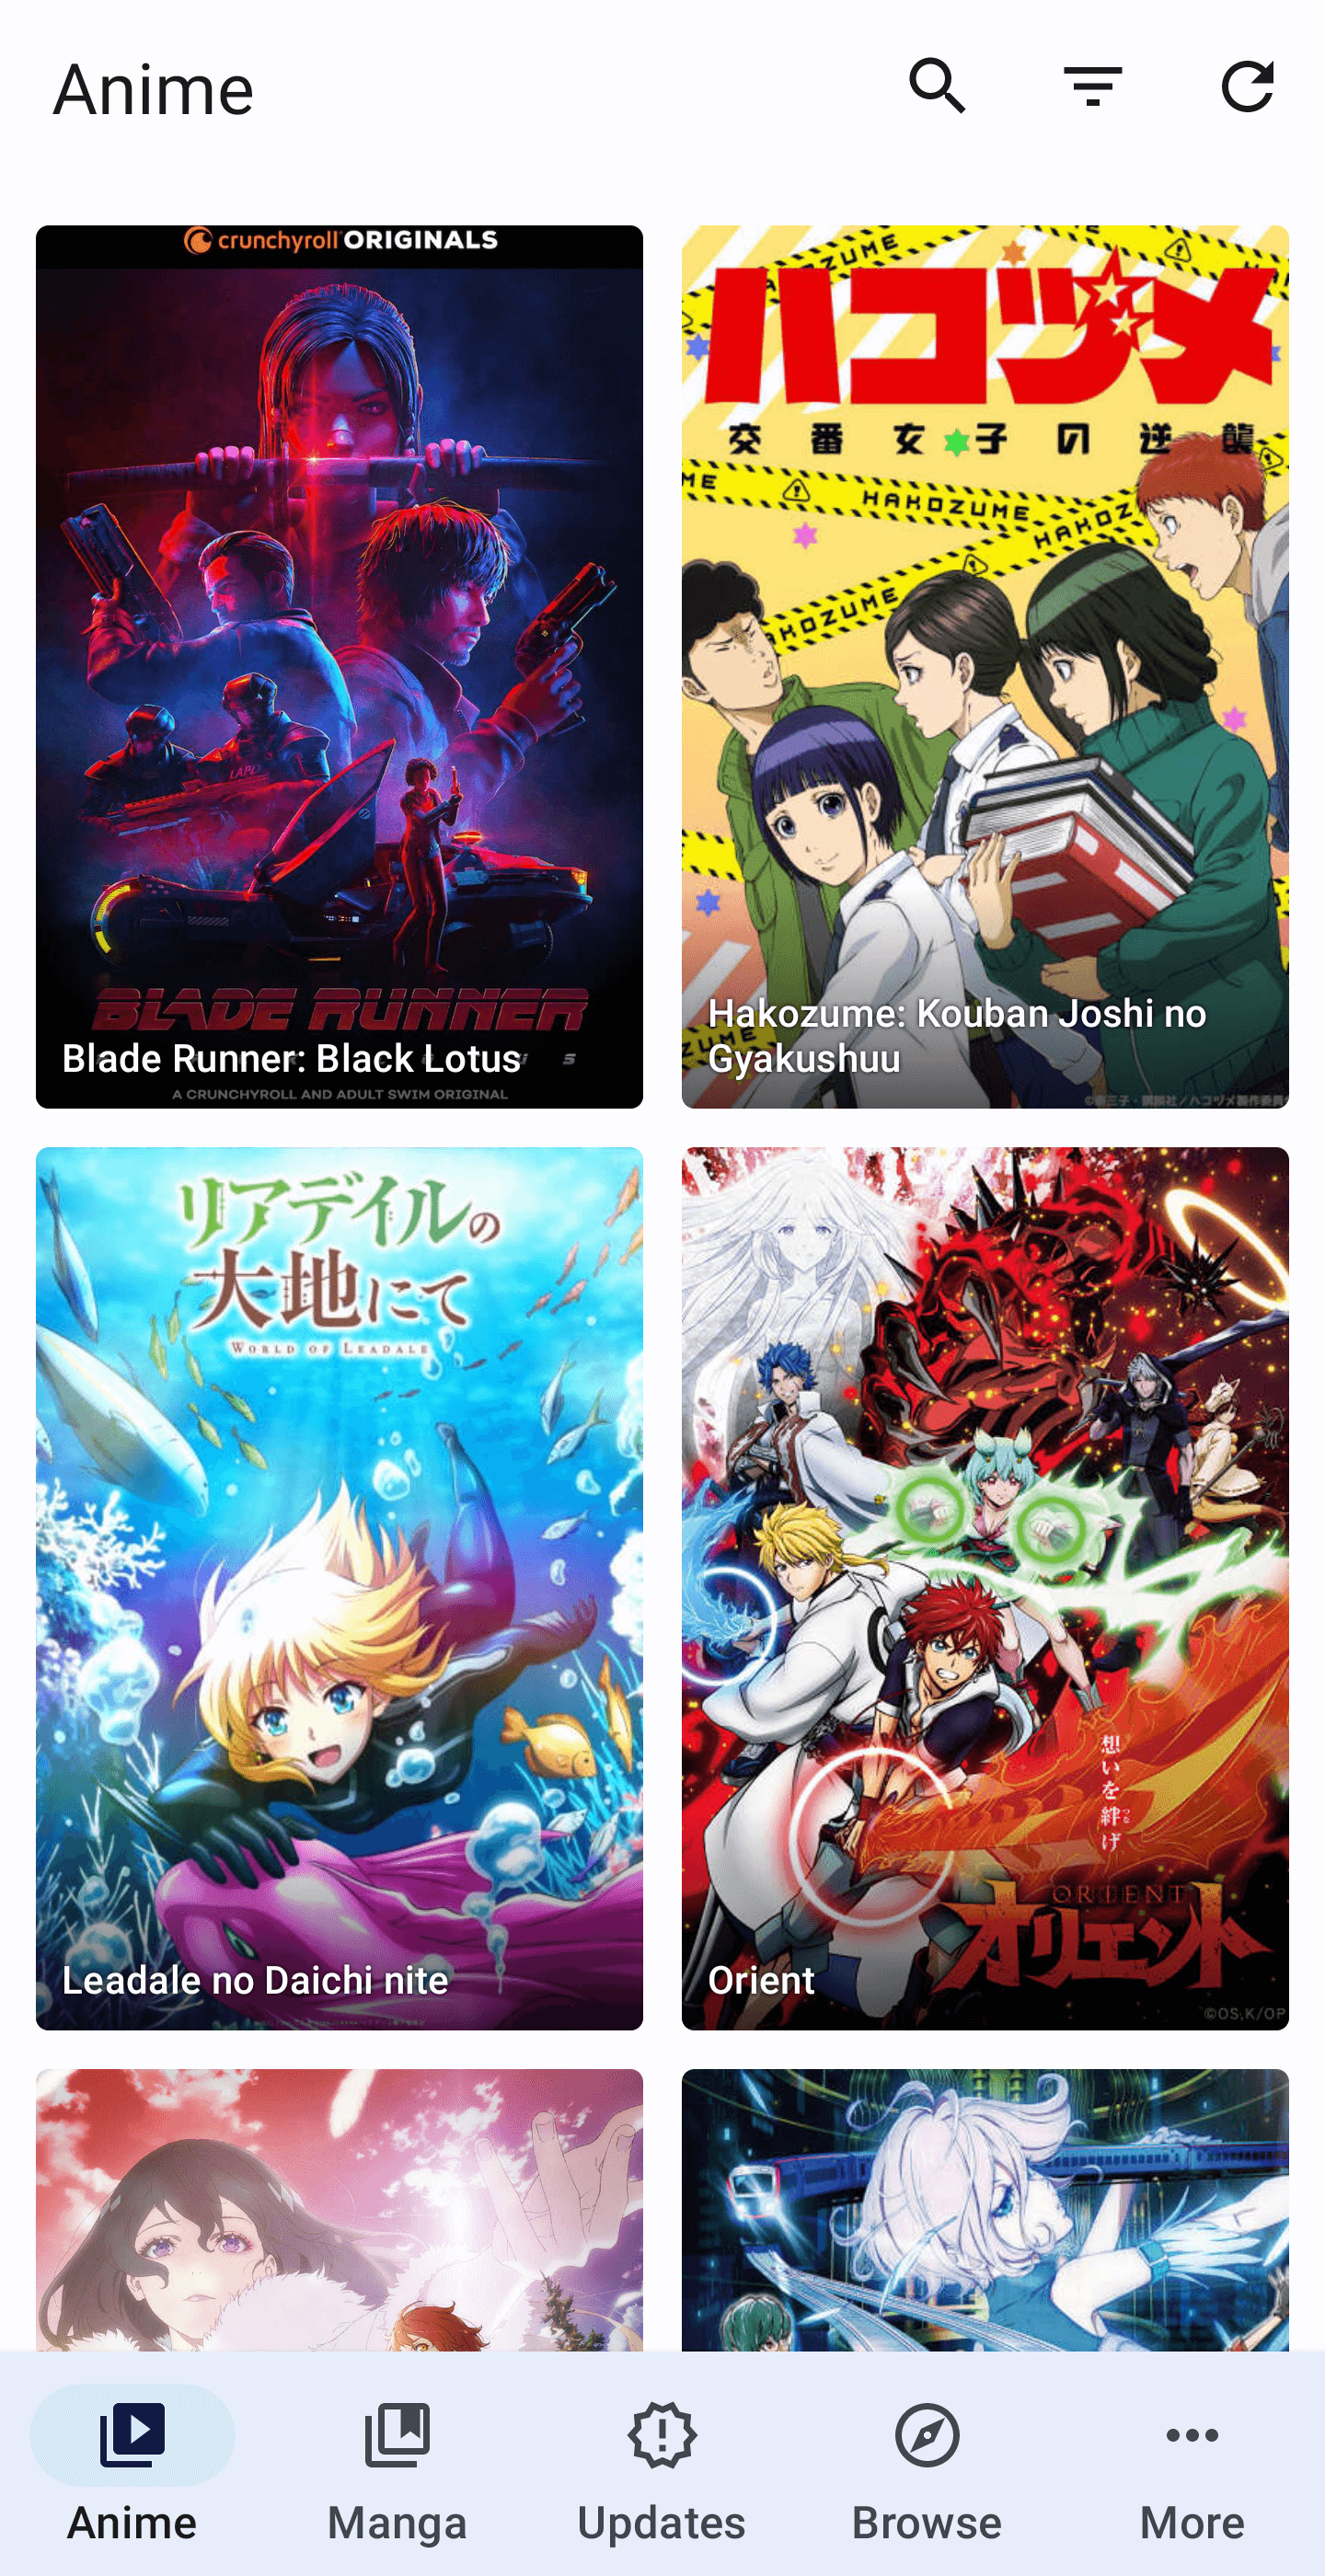 Central de Animes Apk Download for Android- Latest version 3.0-  com.gigaent.animesappz